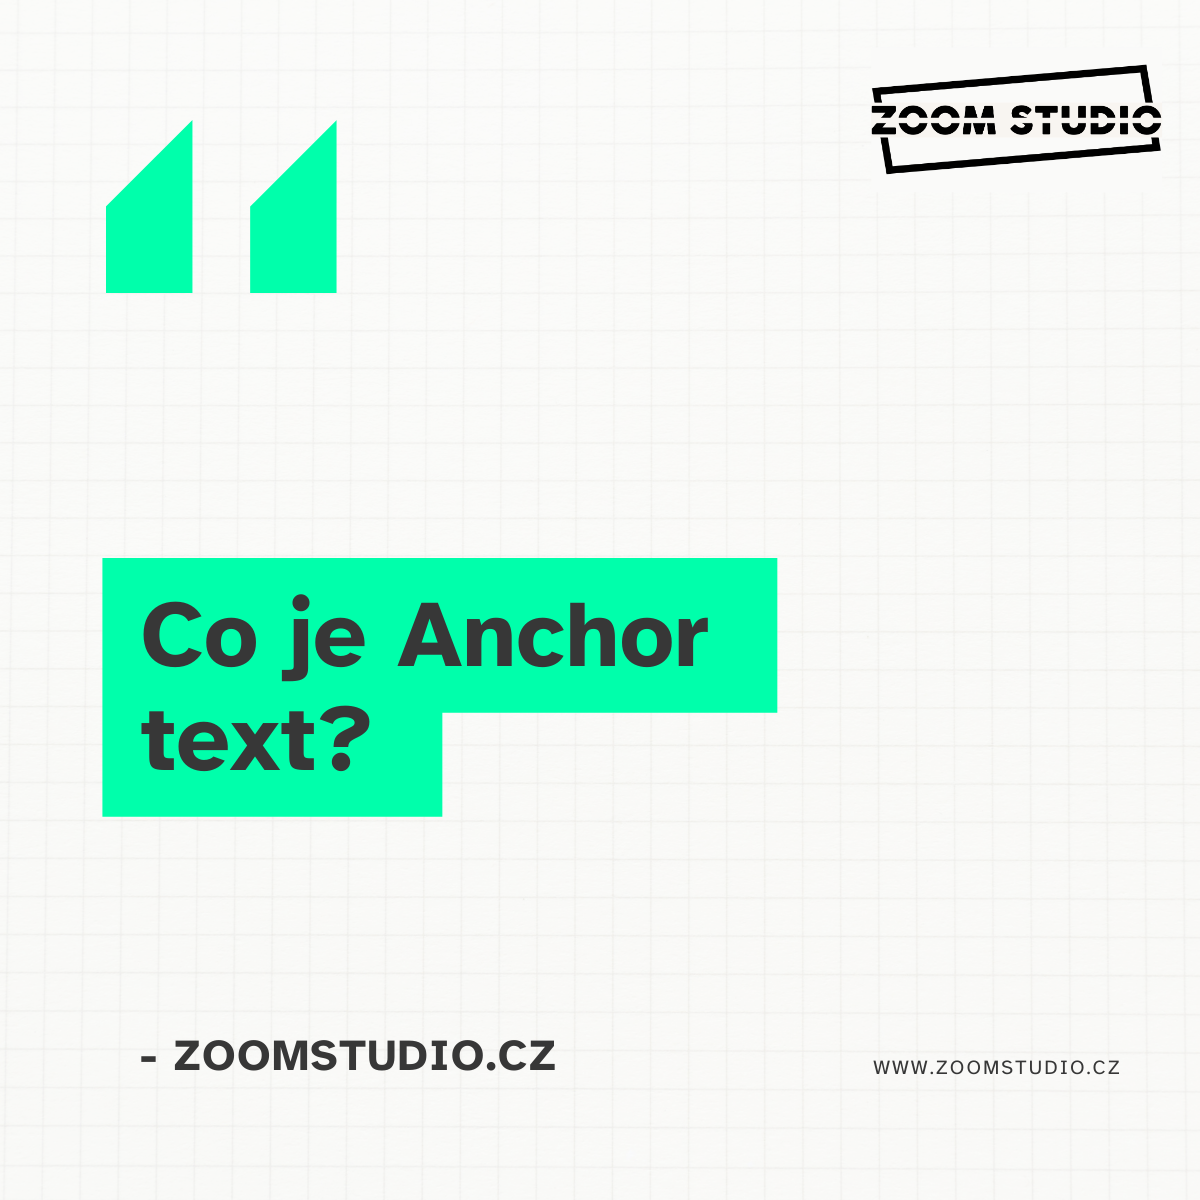 Co je Anchor text?